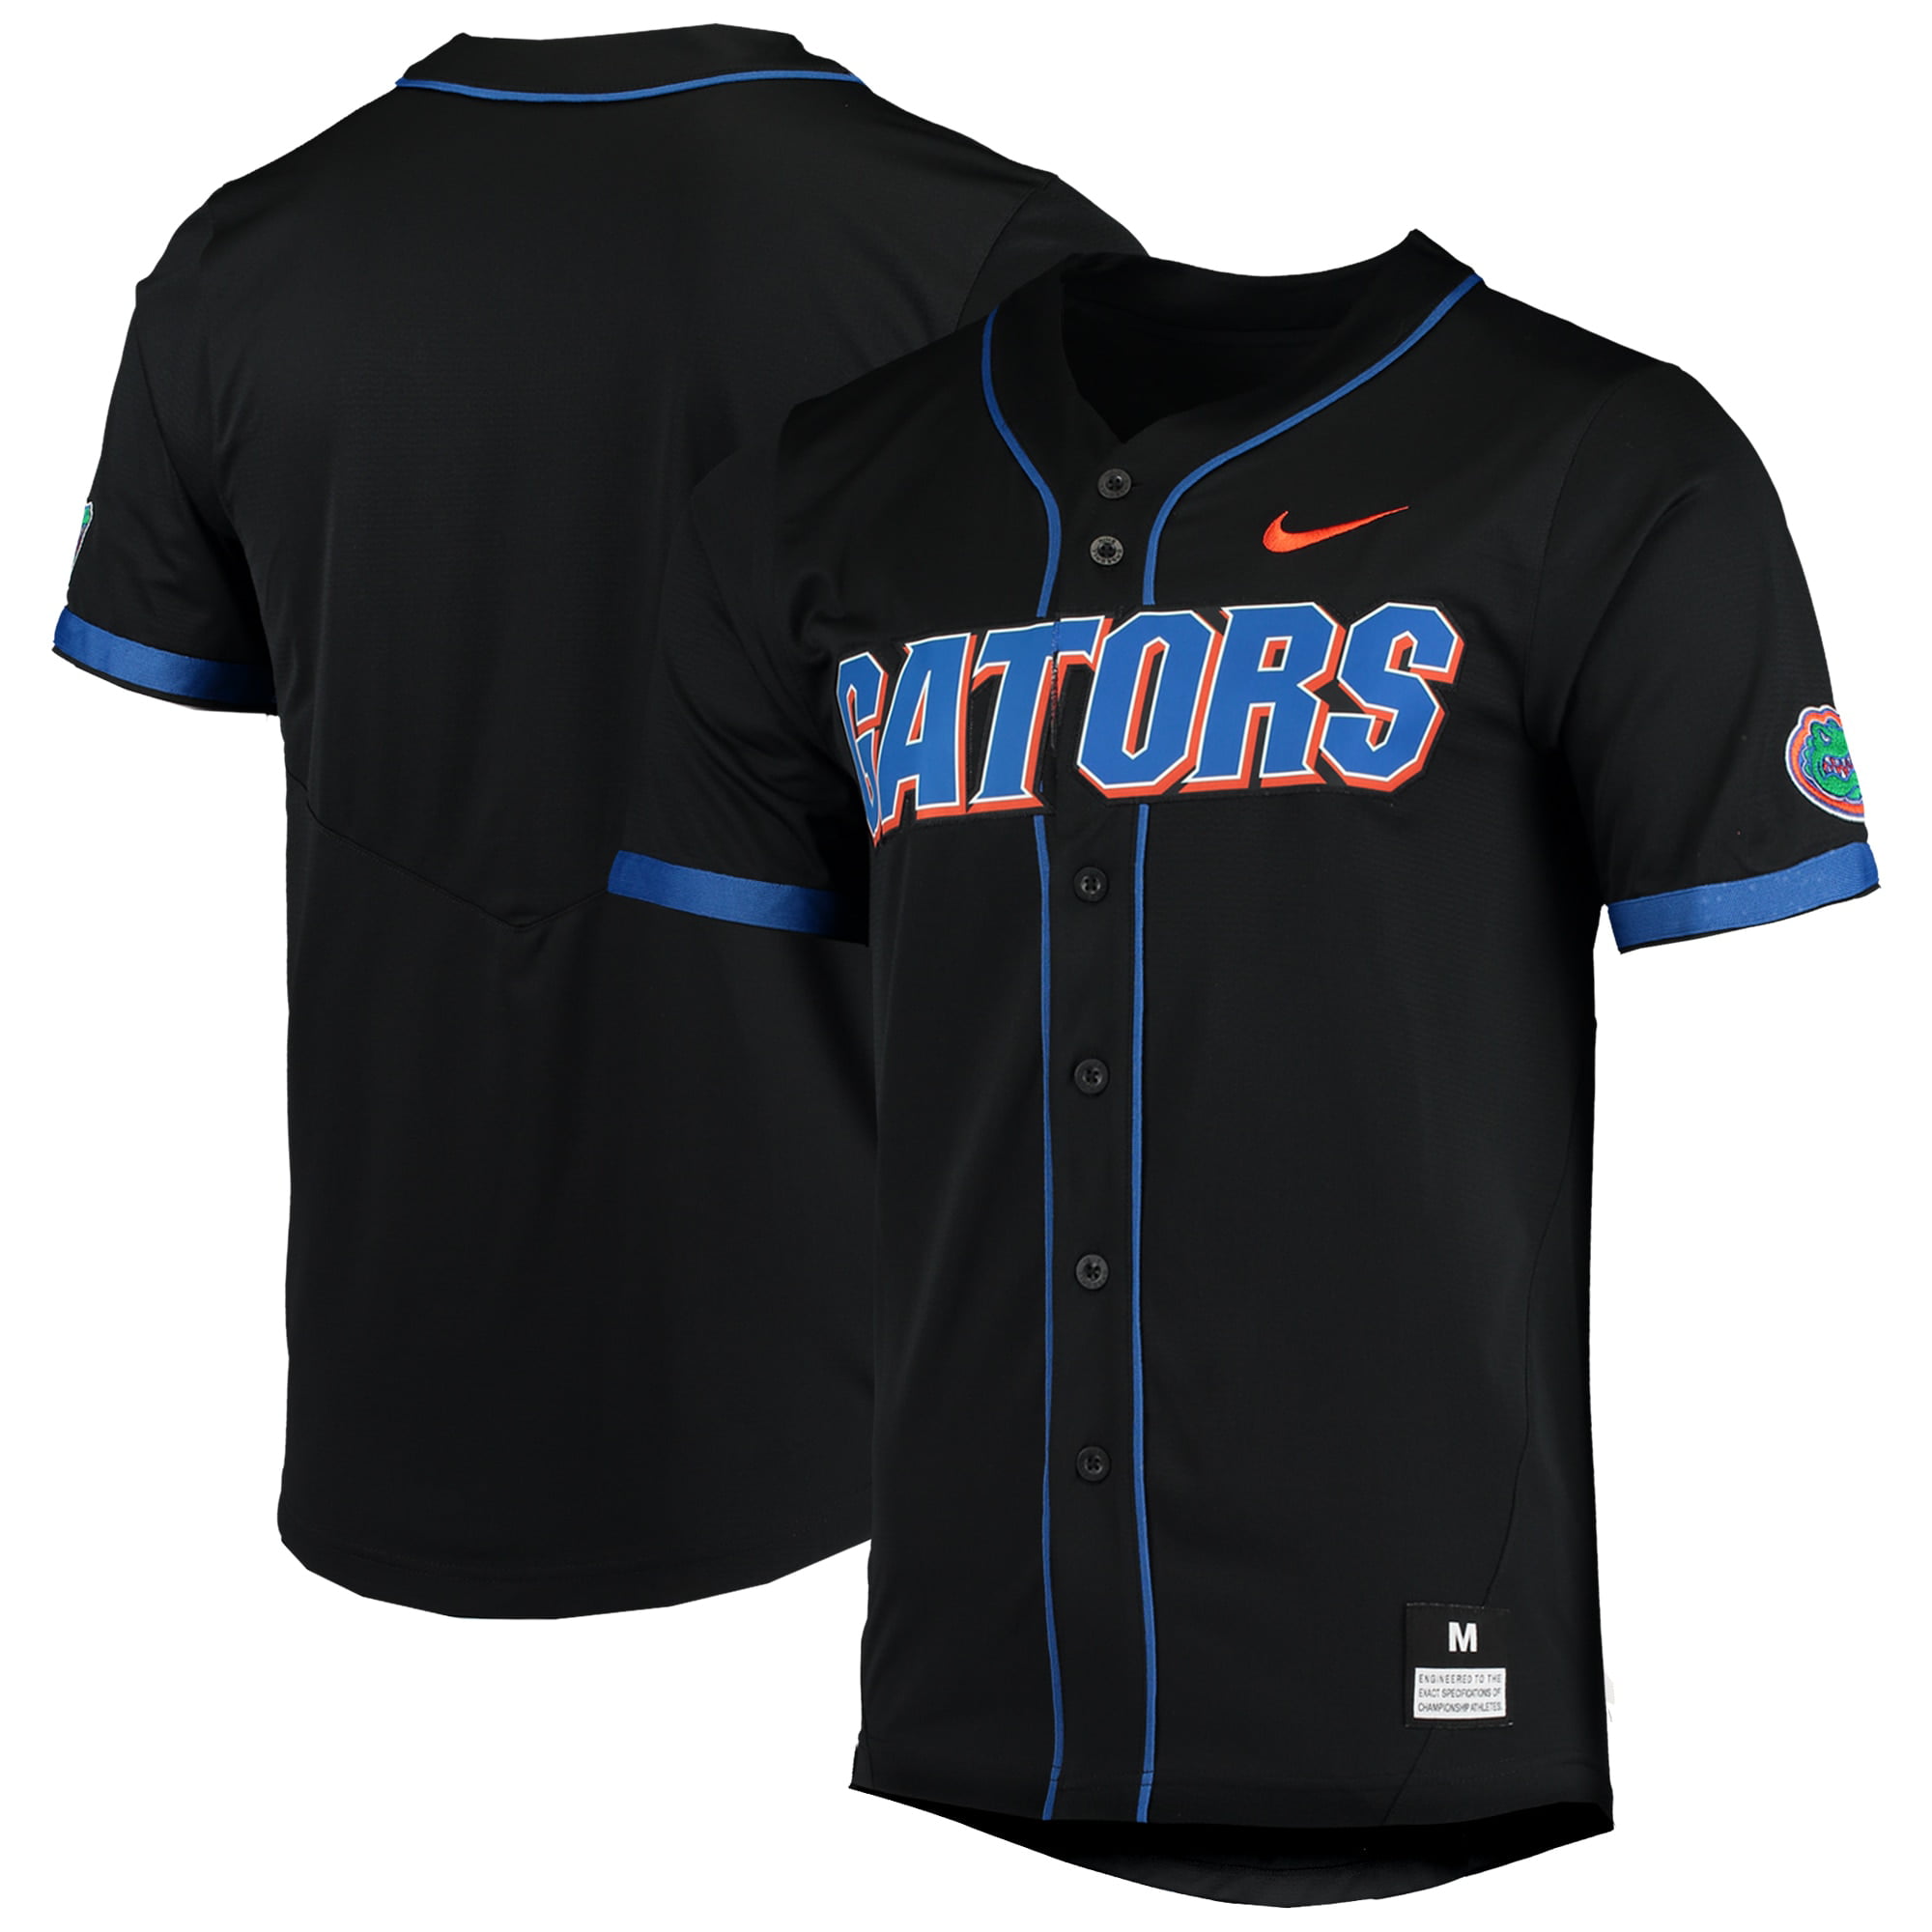 florida gators baseball jersey,Save up to